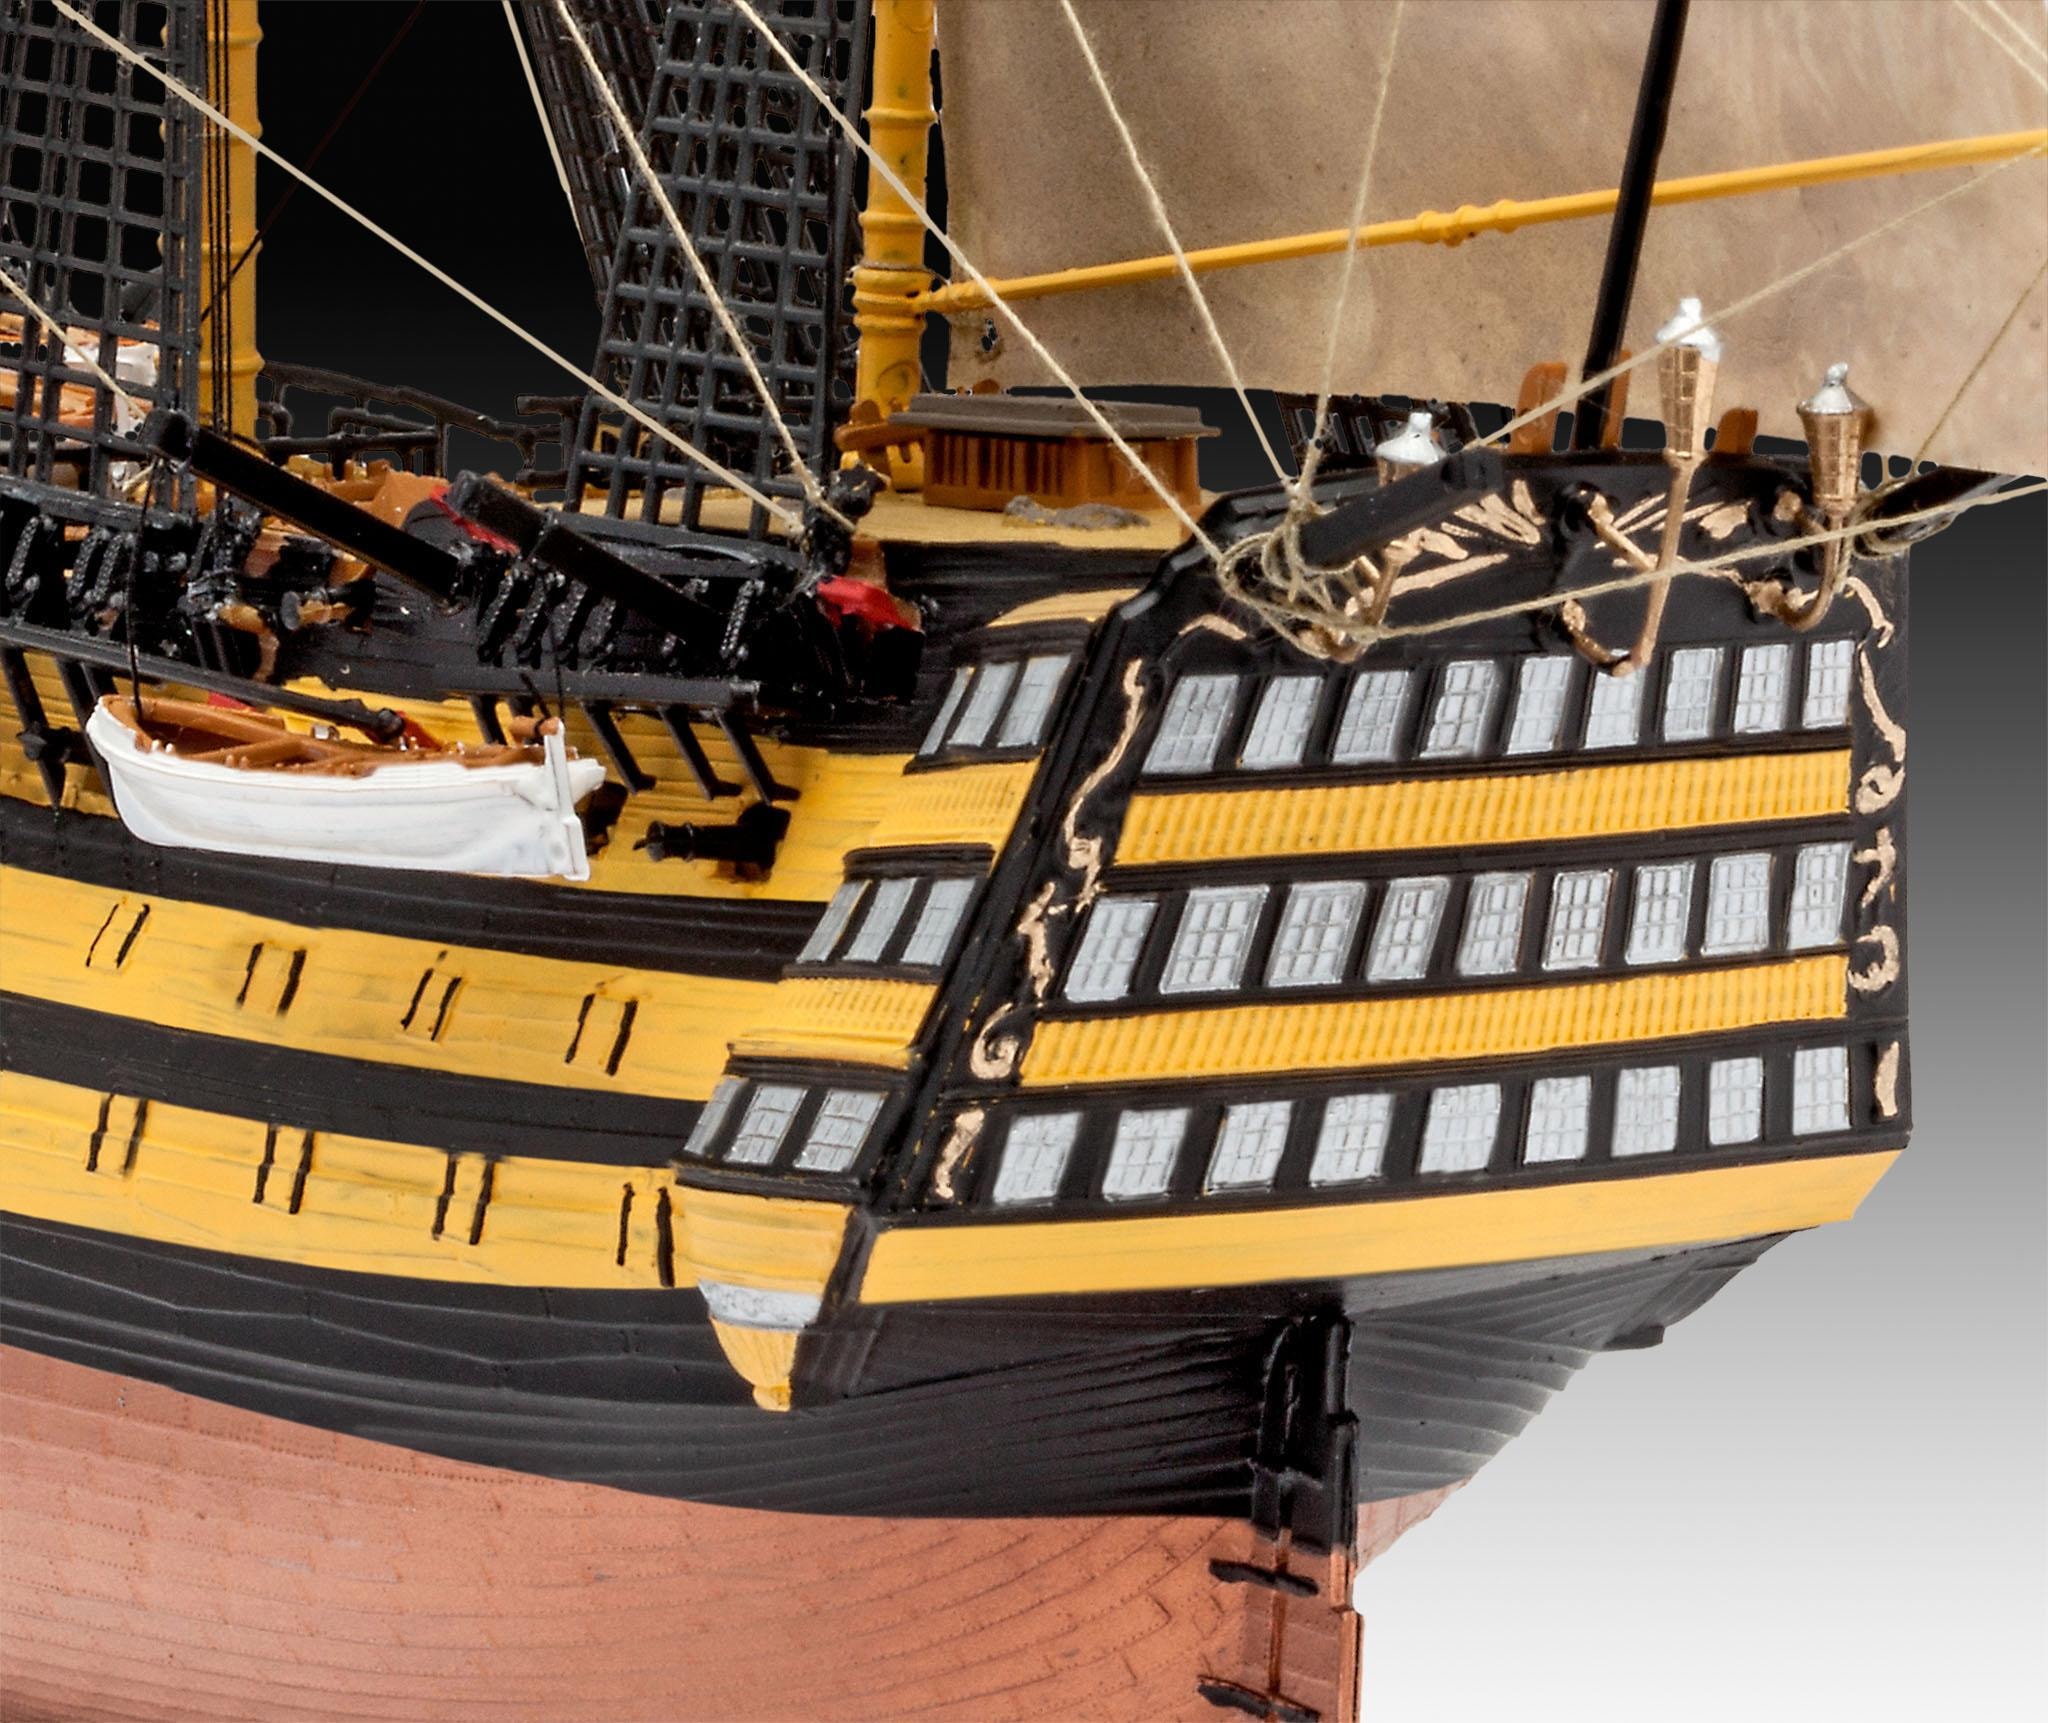 Revell® Modellbausatz »HMS Victory, Battle of Trafalgar«, 1:225, Made in Europe